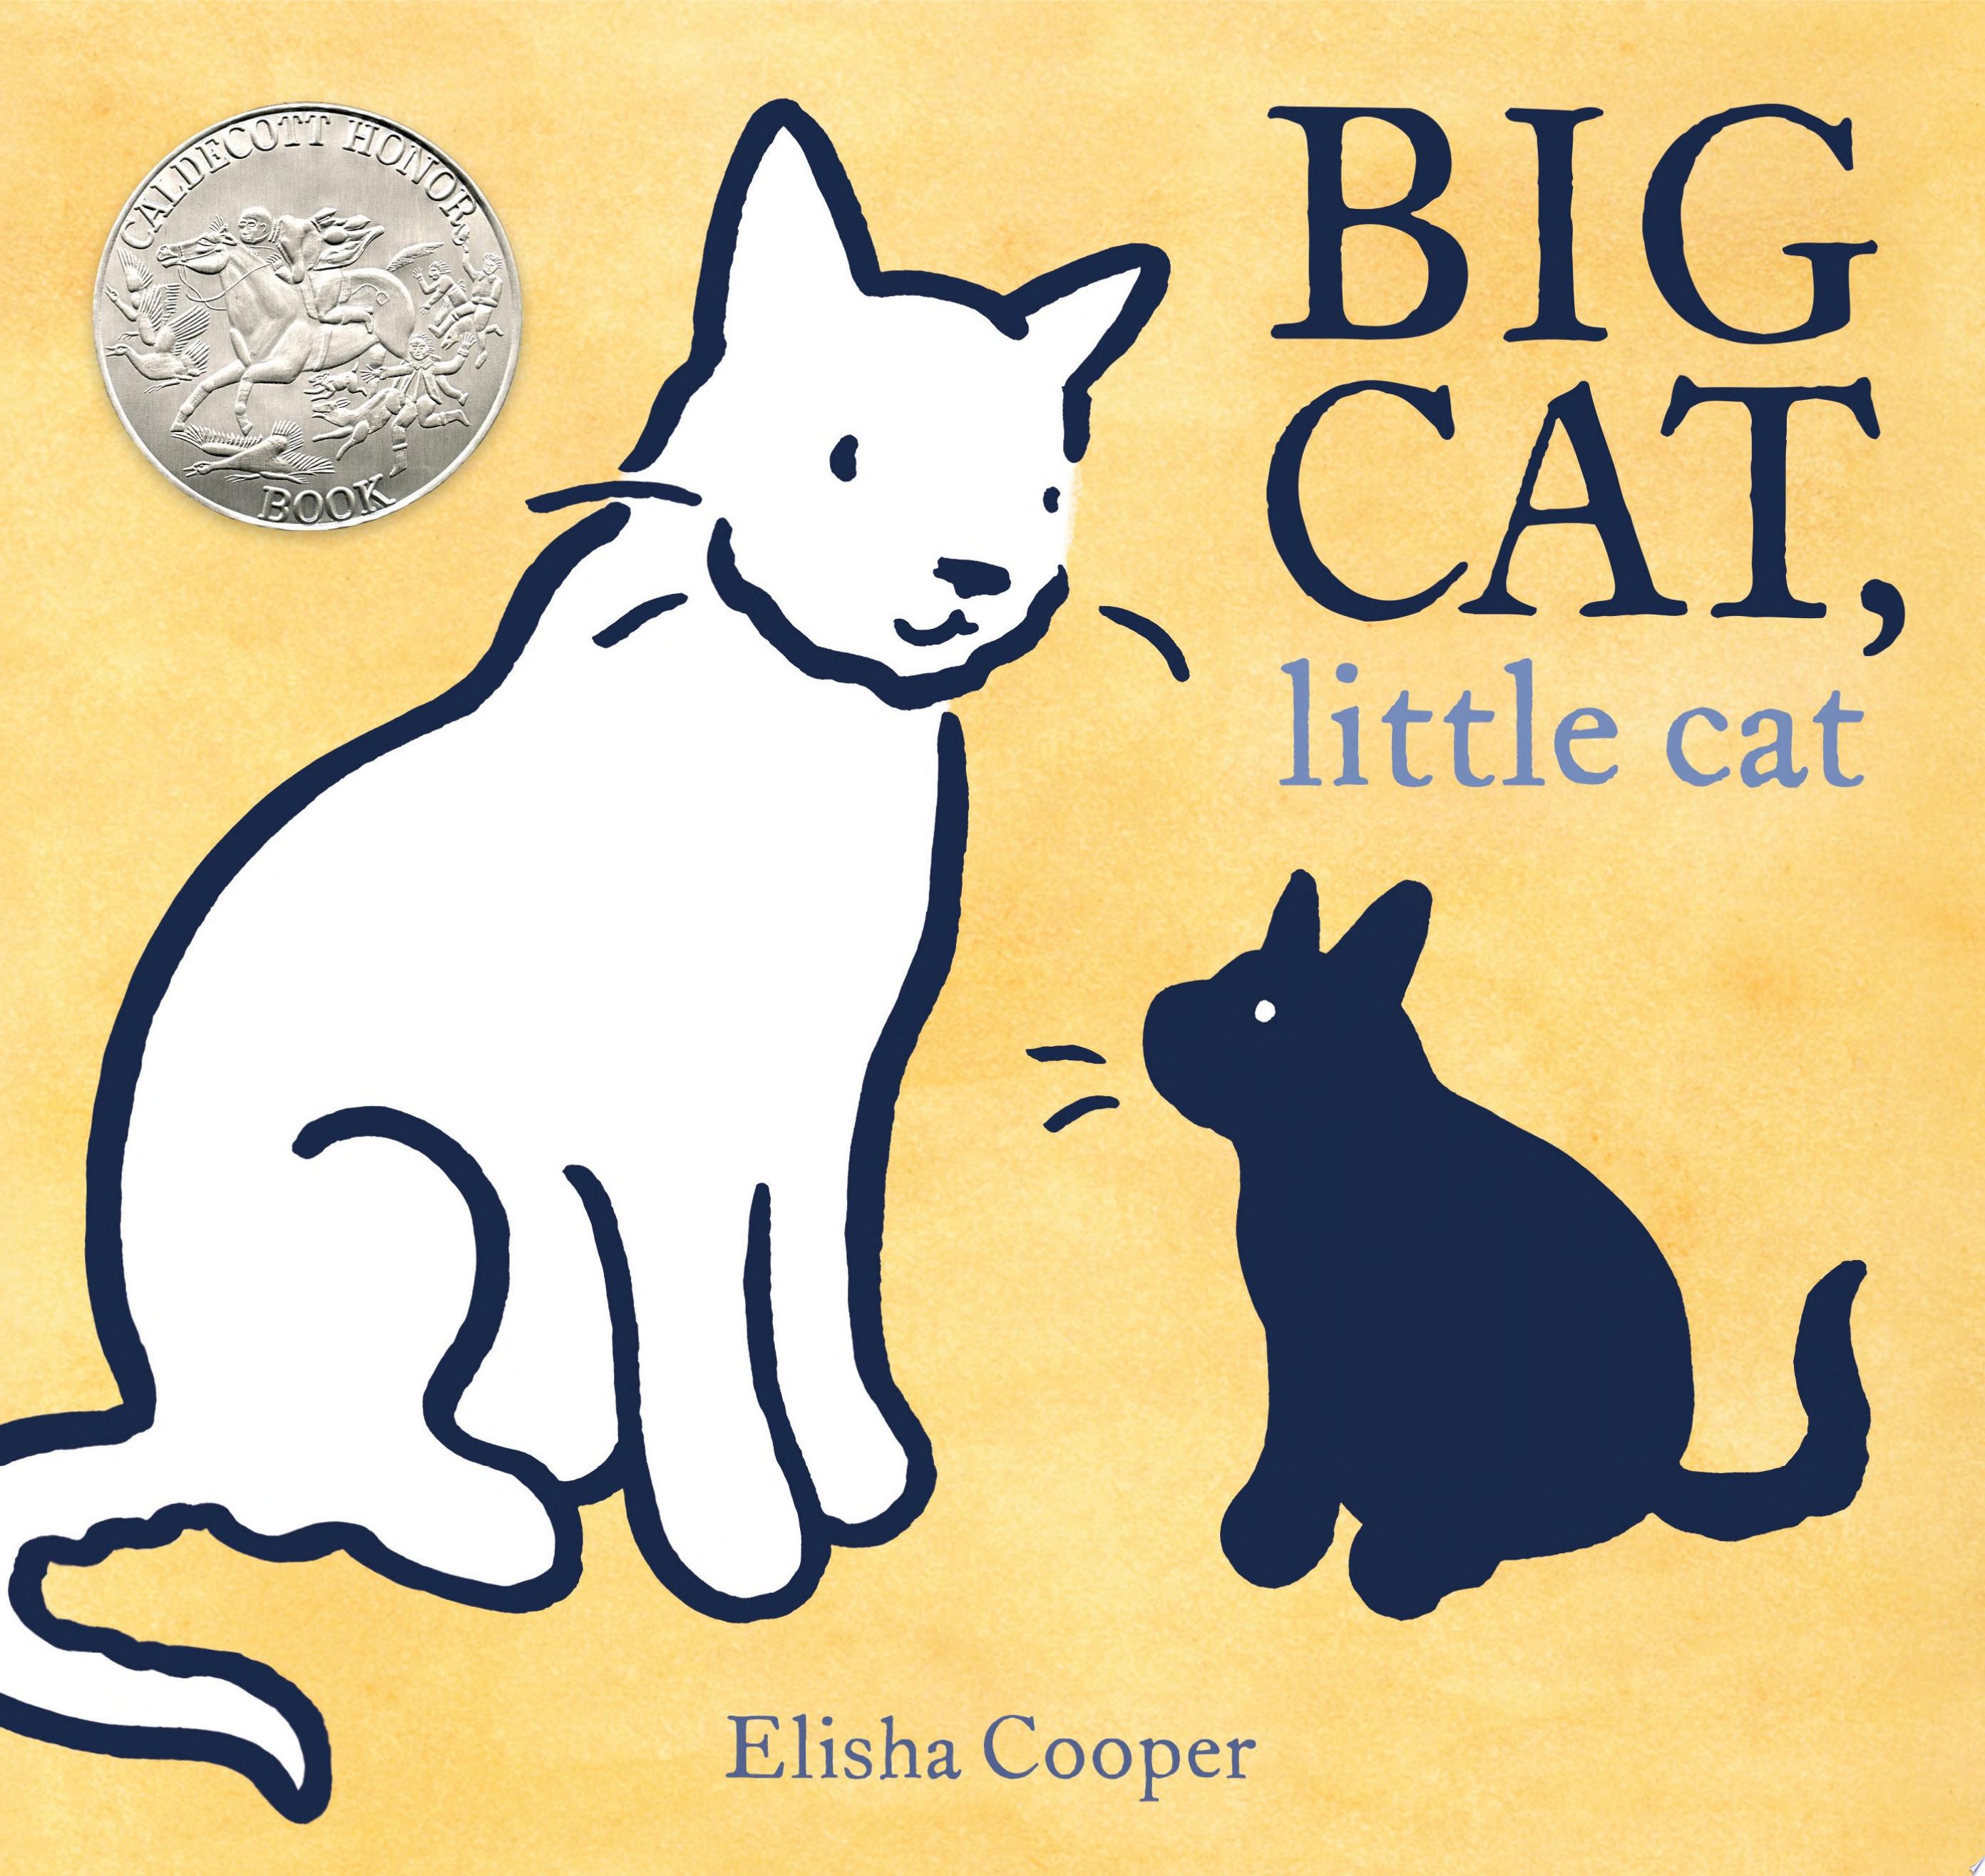 Image for "Big Cat, Little Cat"